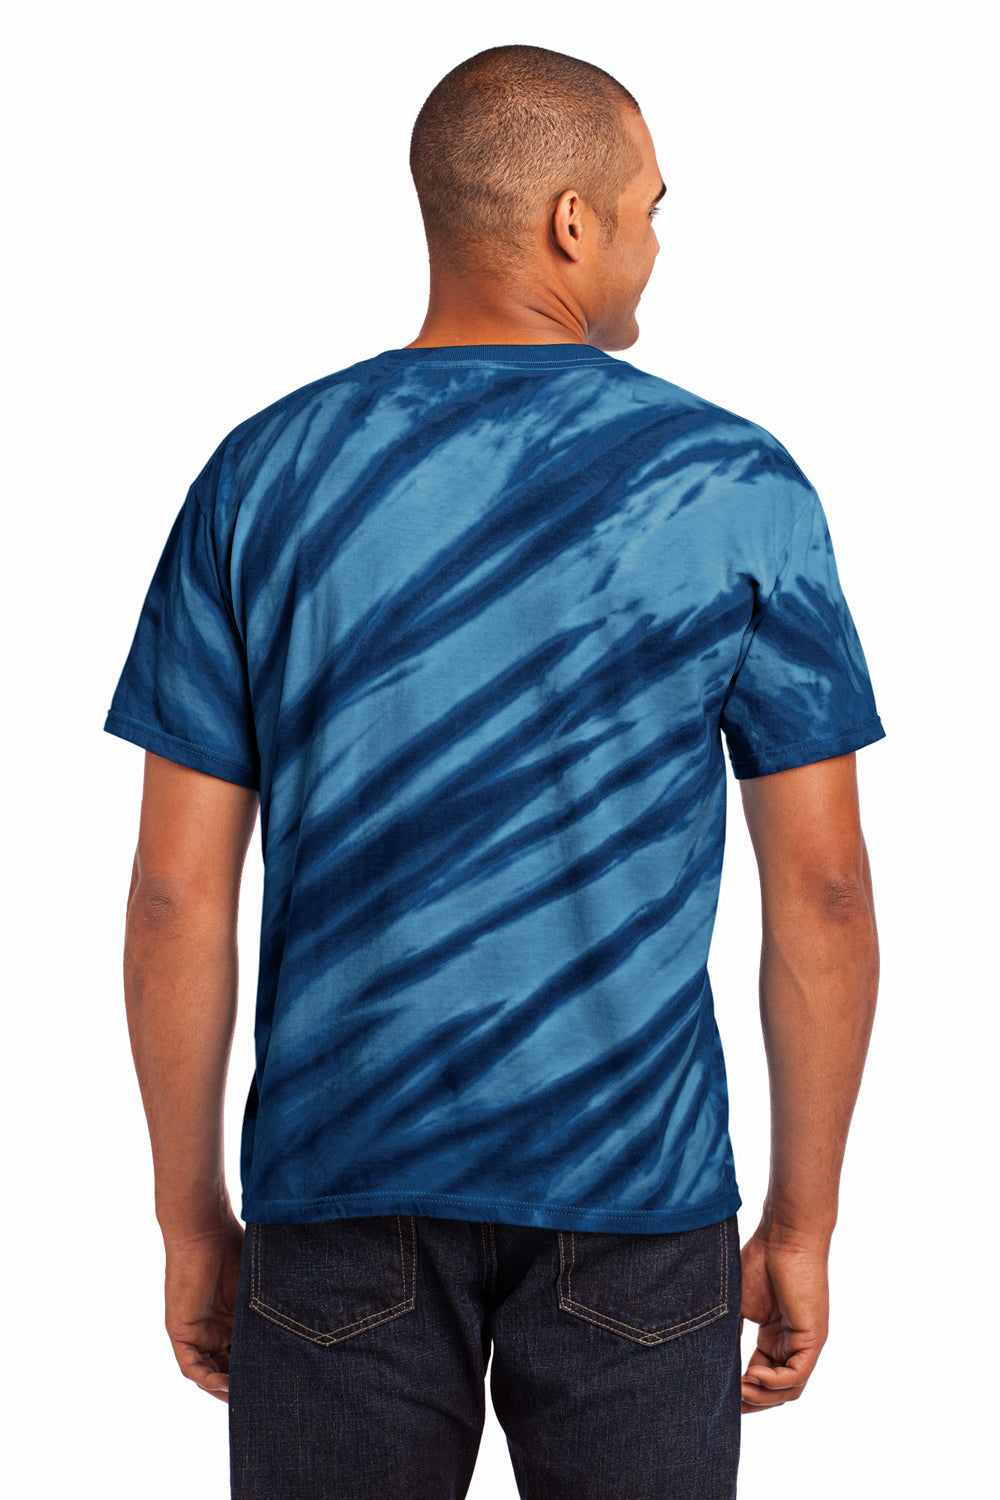 Port & Company PC148 Mens Tie-Dye Short Sleeve Crewneck T-Shirt Navy Blue Back